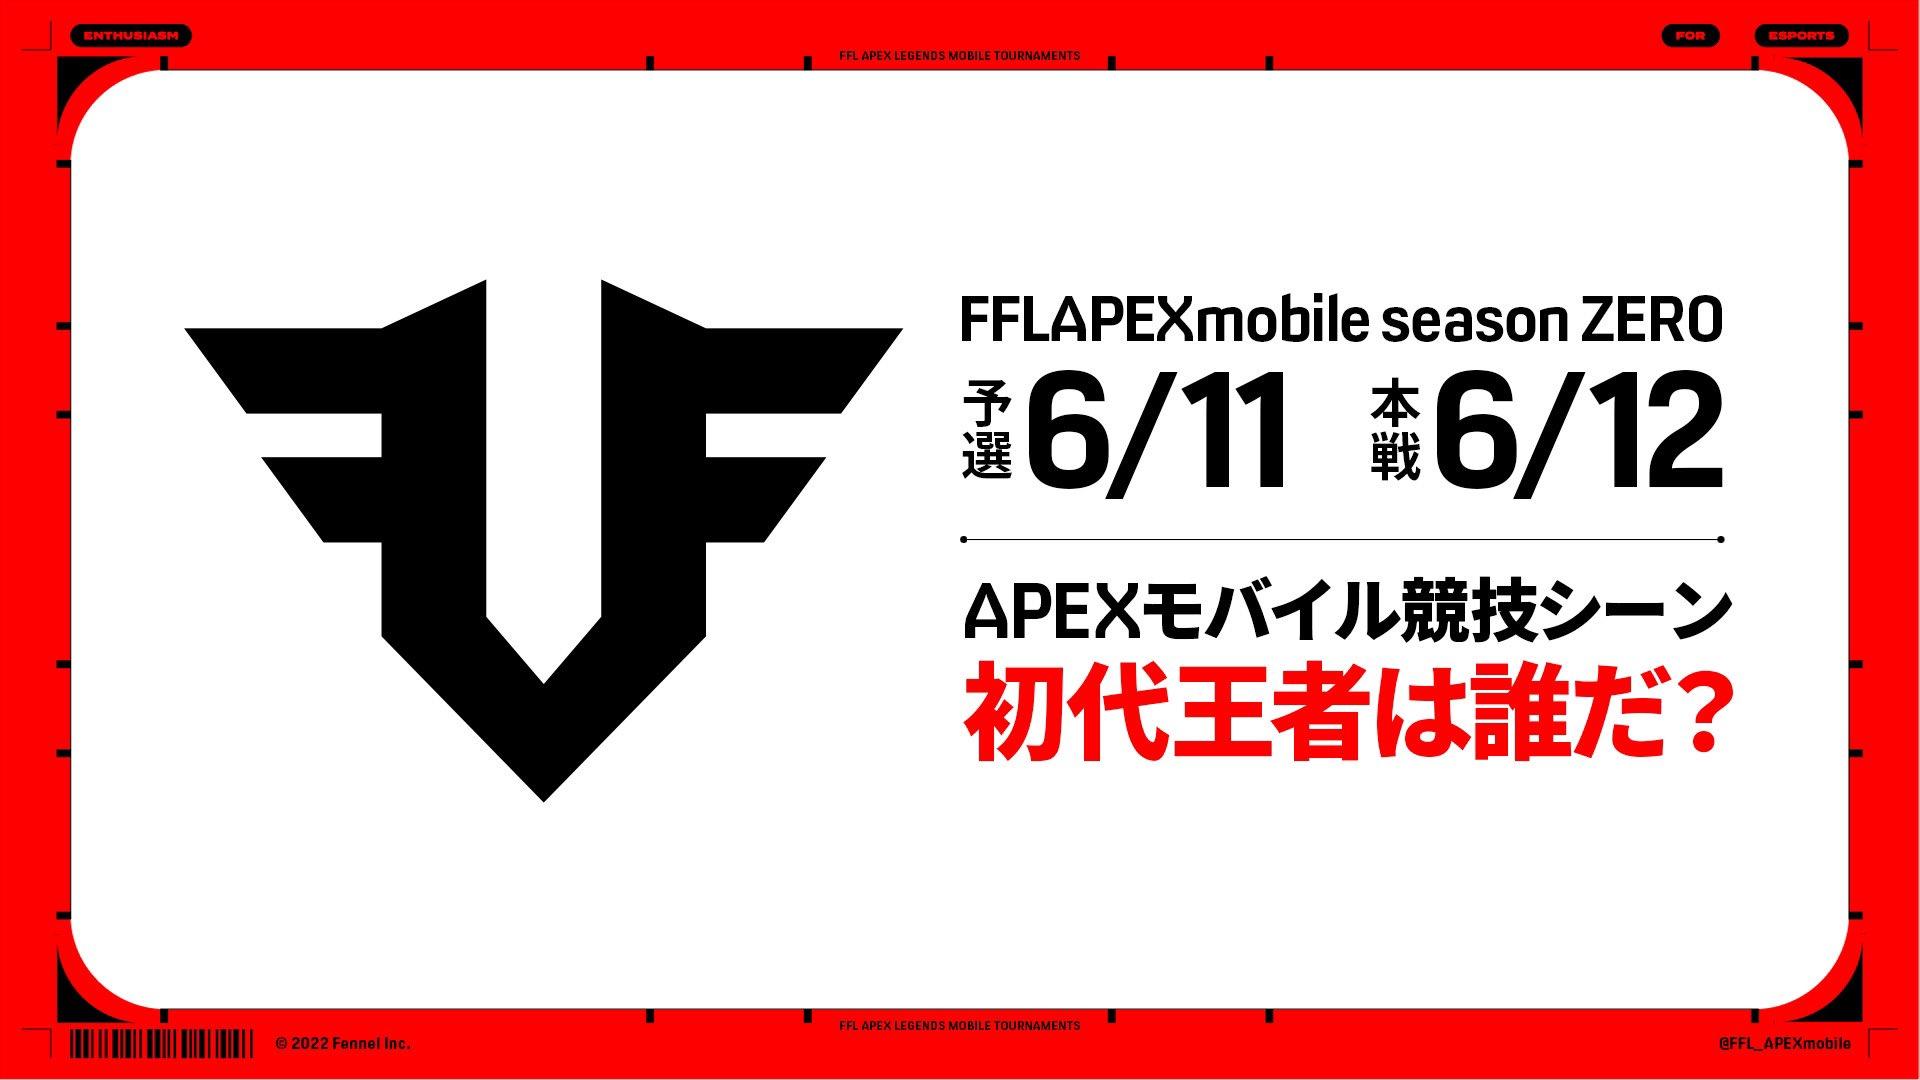 FFL APEX mobile season ZERO feature image